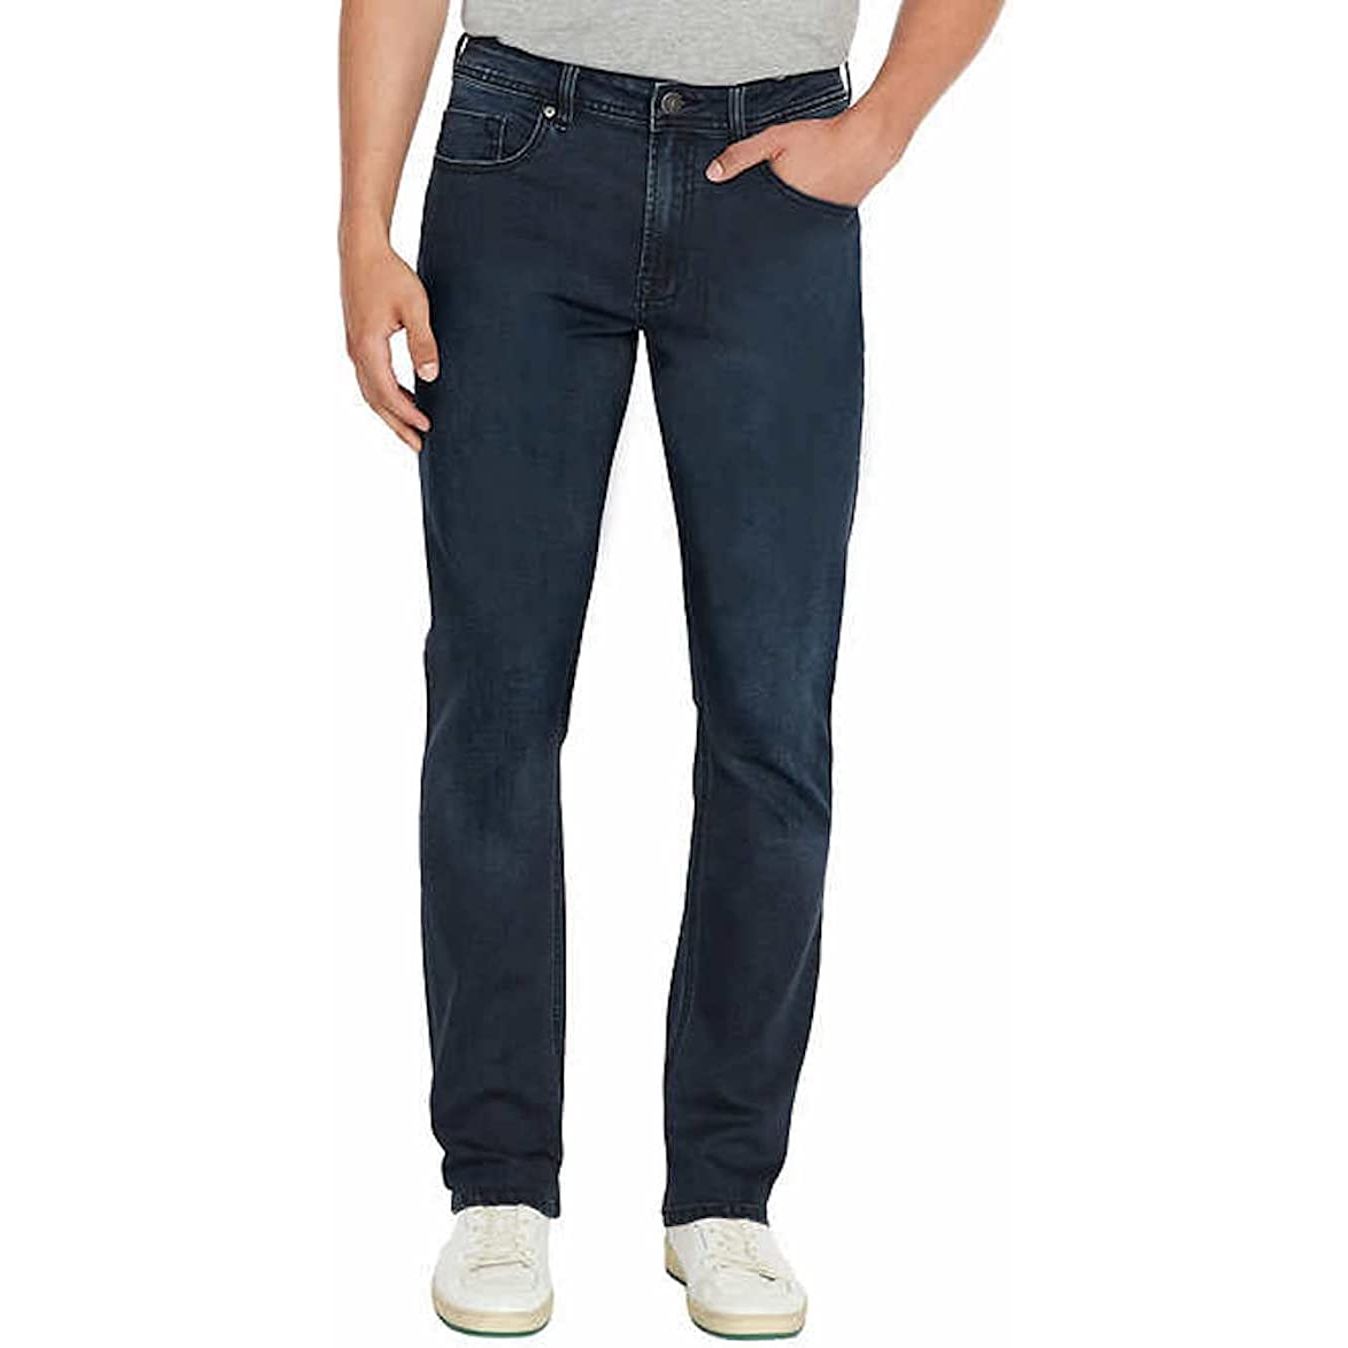 Buffalo David Bitton Men's Axel Slim Stretch Jeans - Premium Quality Denim, Dark Wash, Slim Fit | Shop Now!